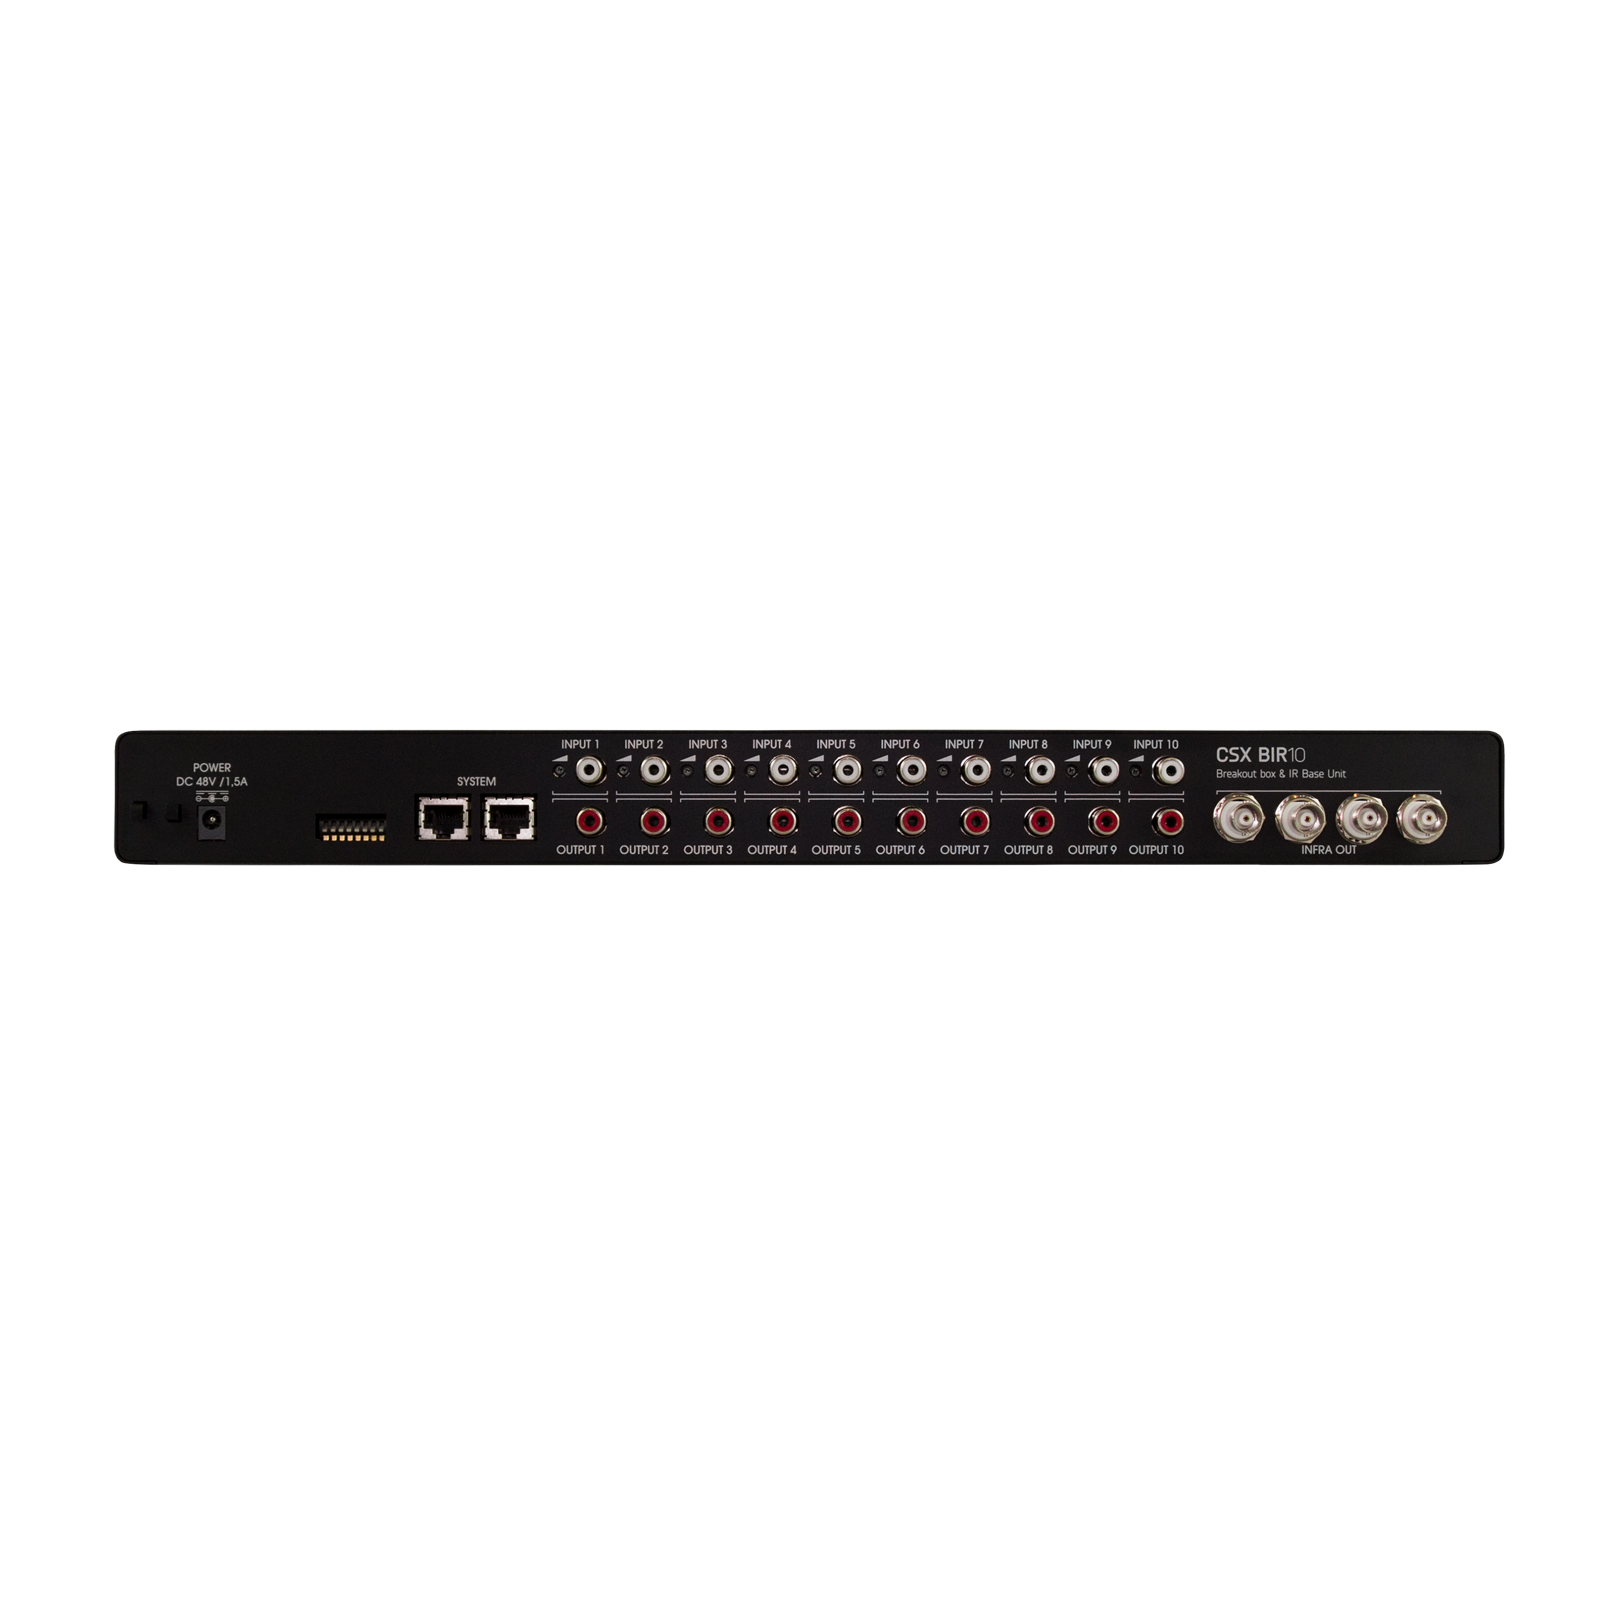 CSX BIR10 - Black - 10 channel infrared control unit and CS5 breakout box - Back